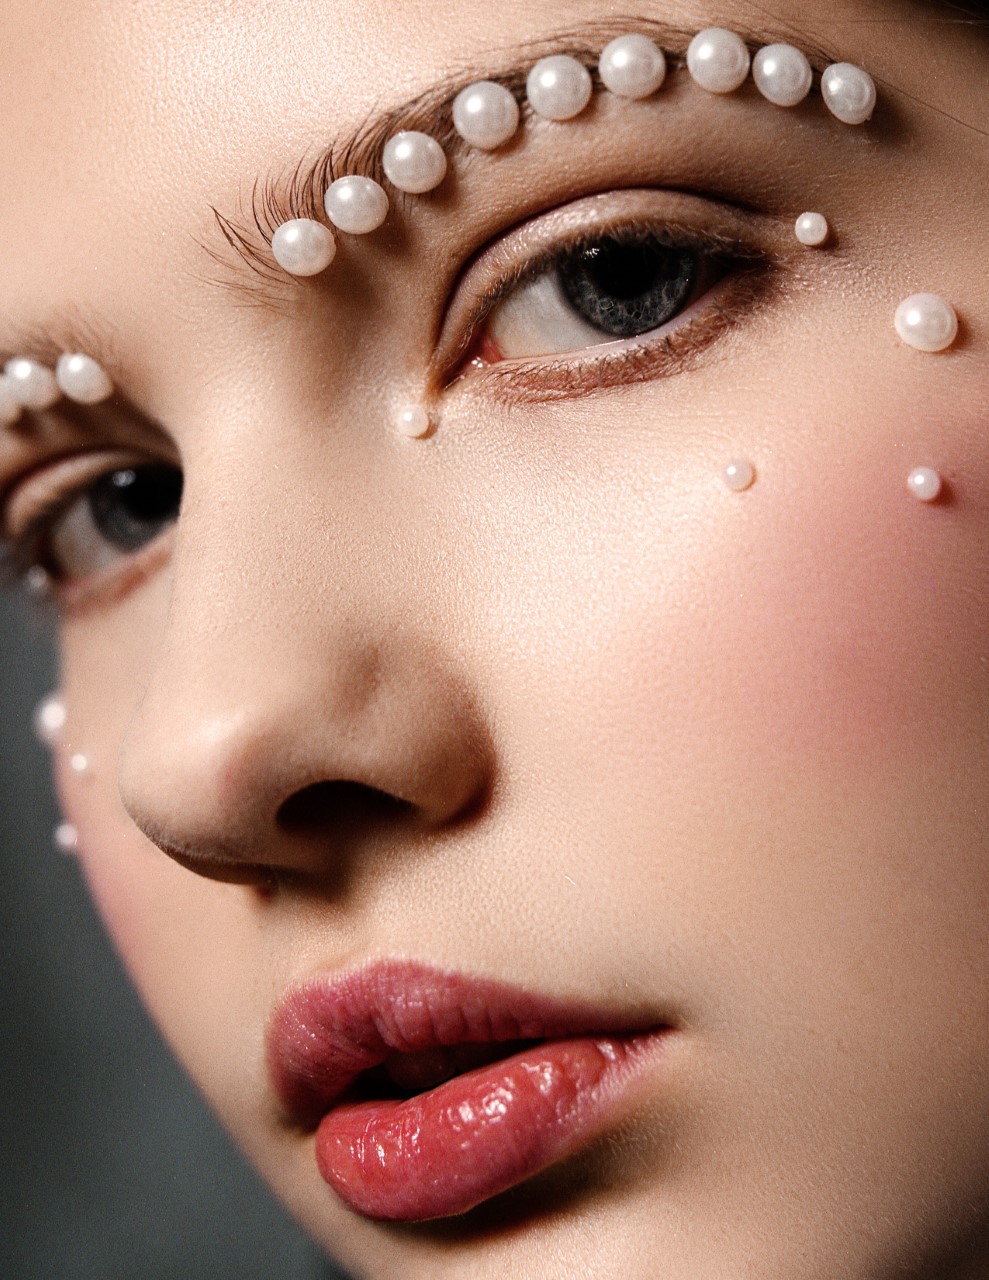 Pearl perfection. Makeup Artist @cyndlekomarovski applies a sweep